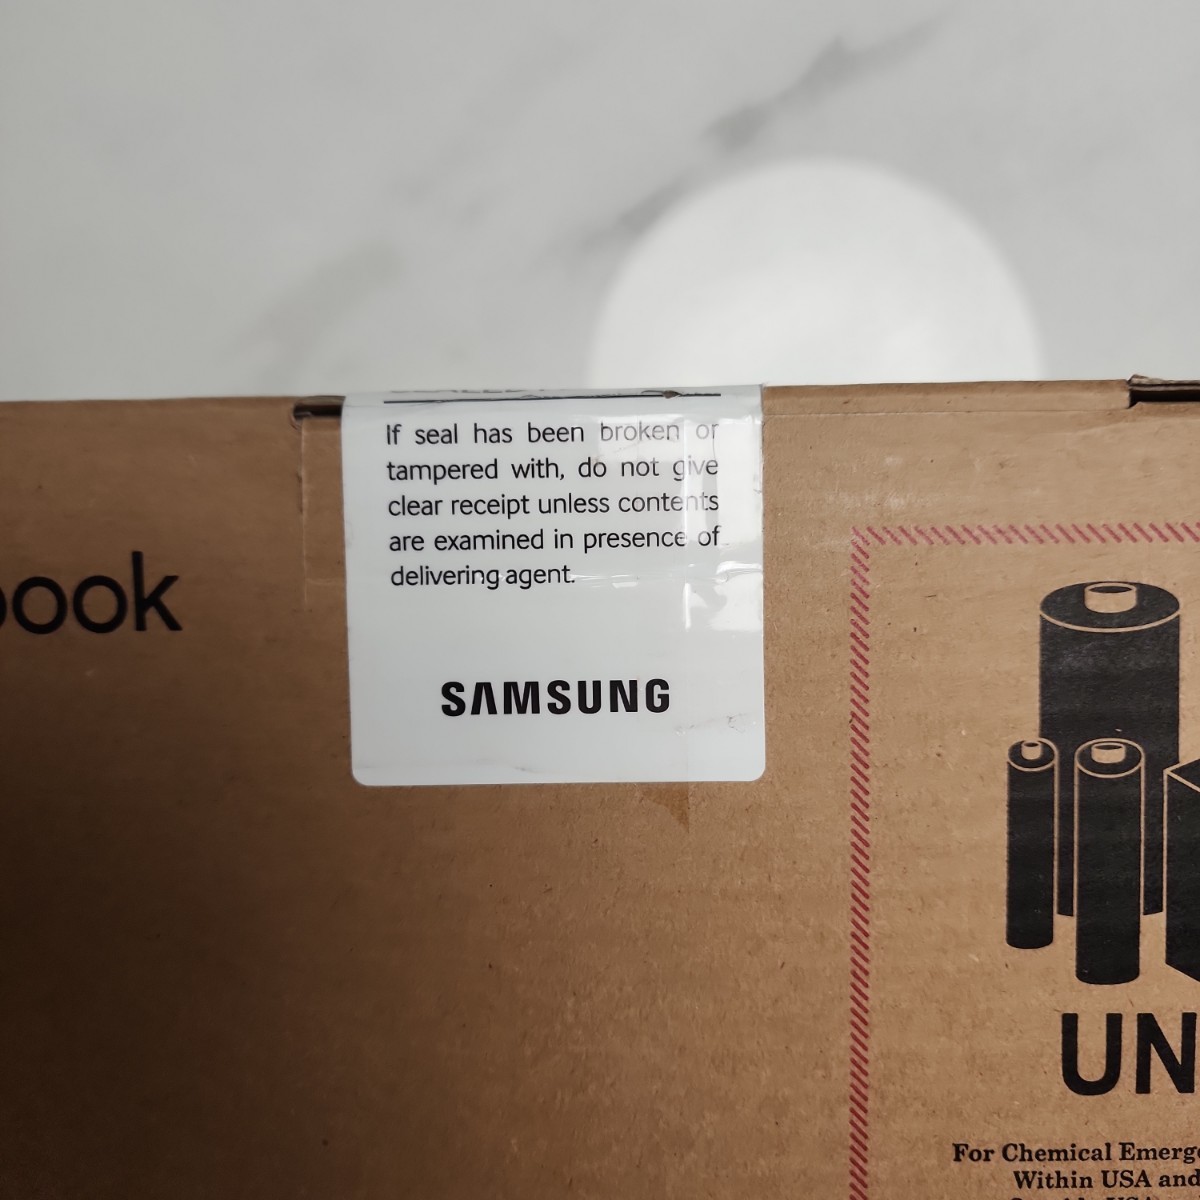 Samsung Chromebook Plus 12.2 Titan 希少品 item details | Yahoo